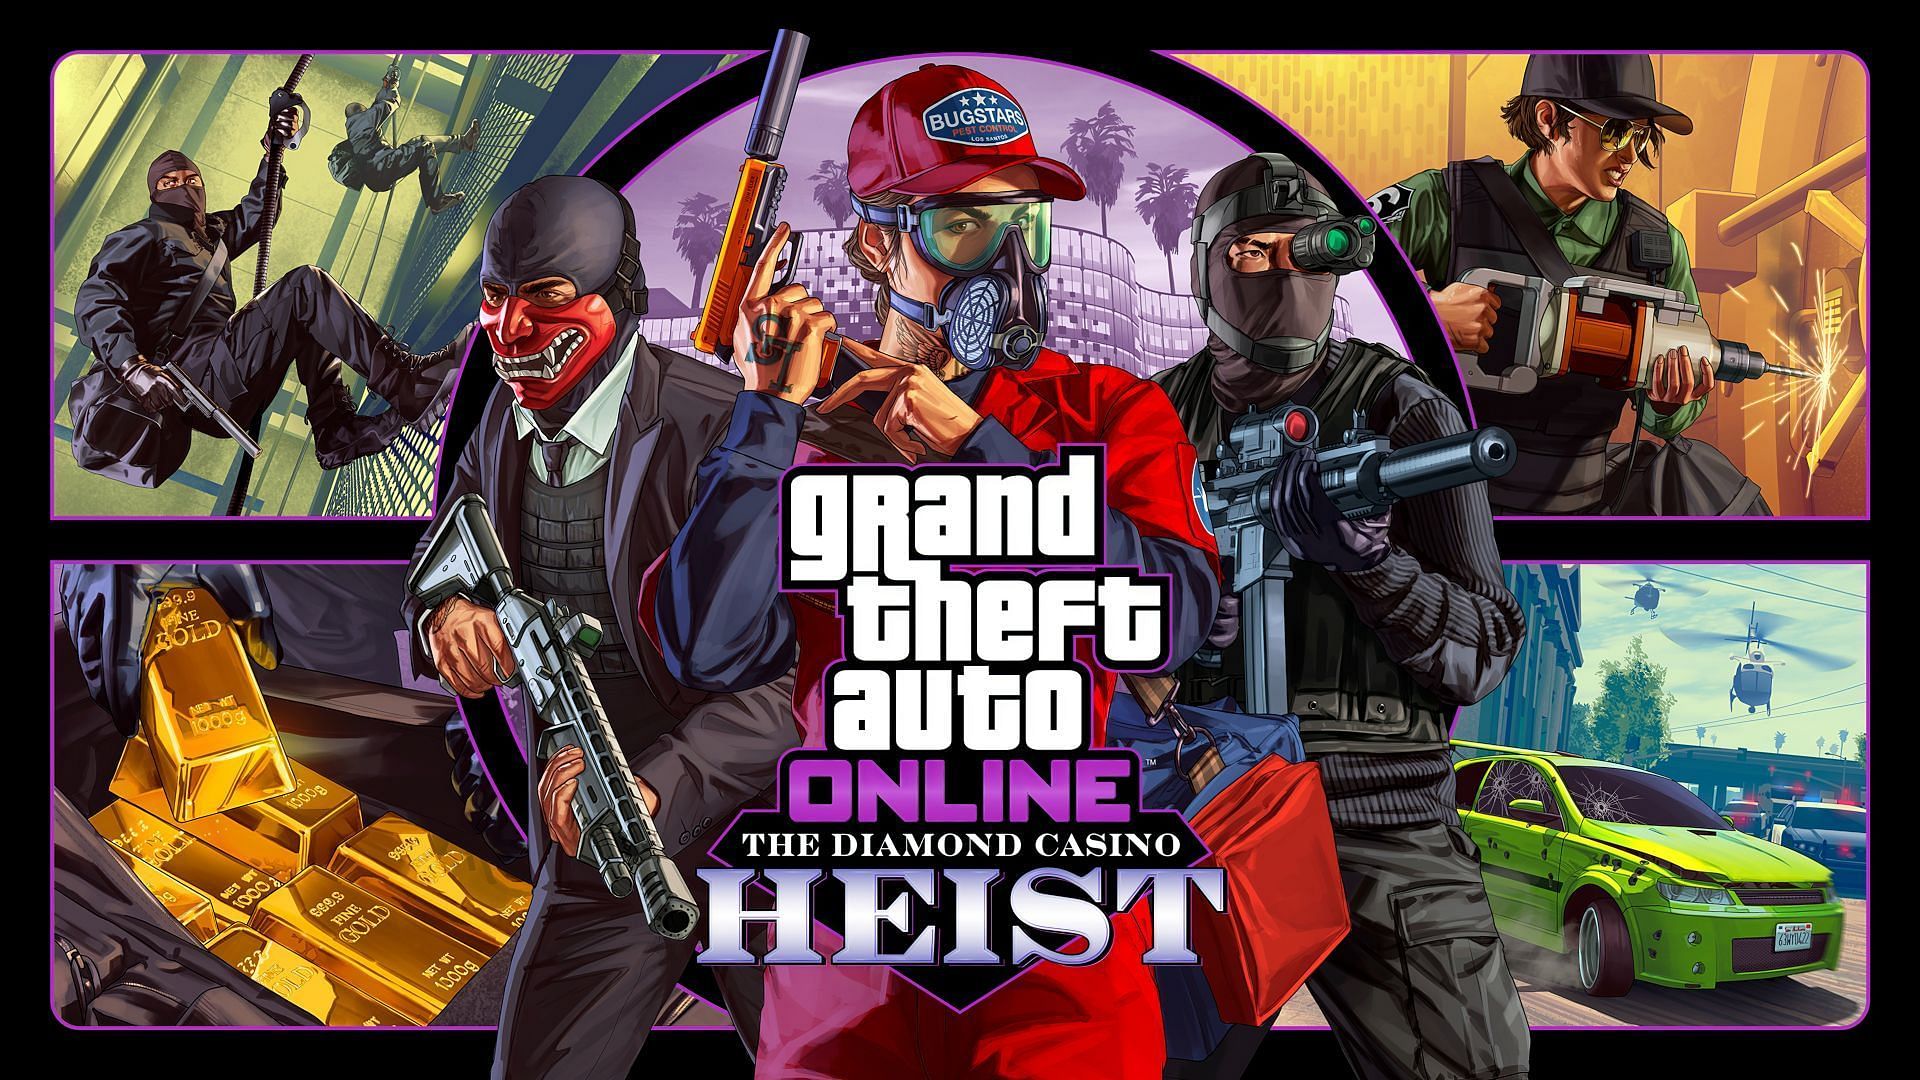 Official artwork for the heist (Image via Rockstar Games)